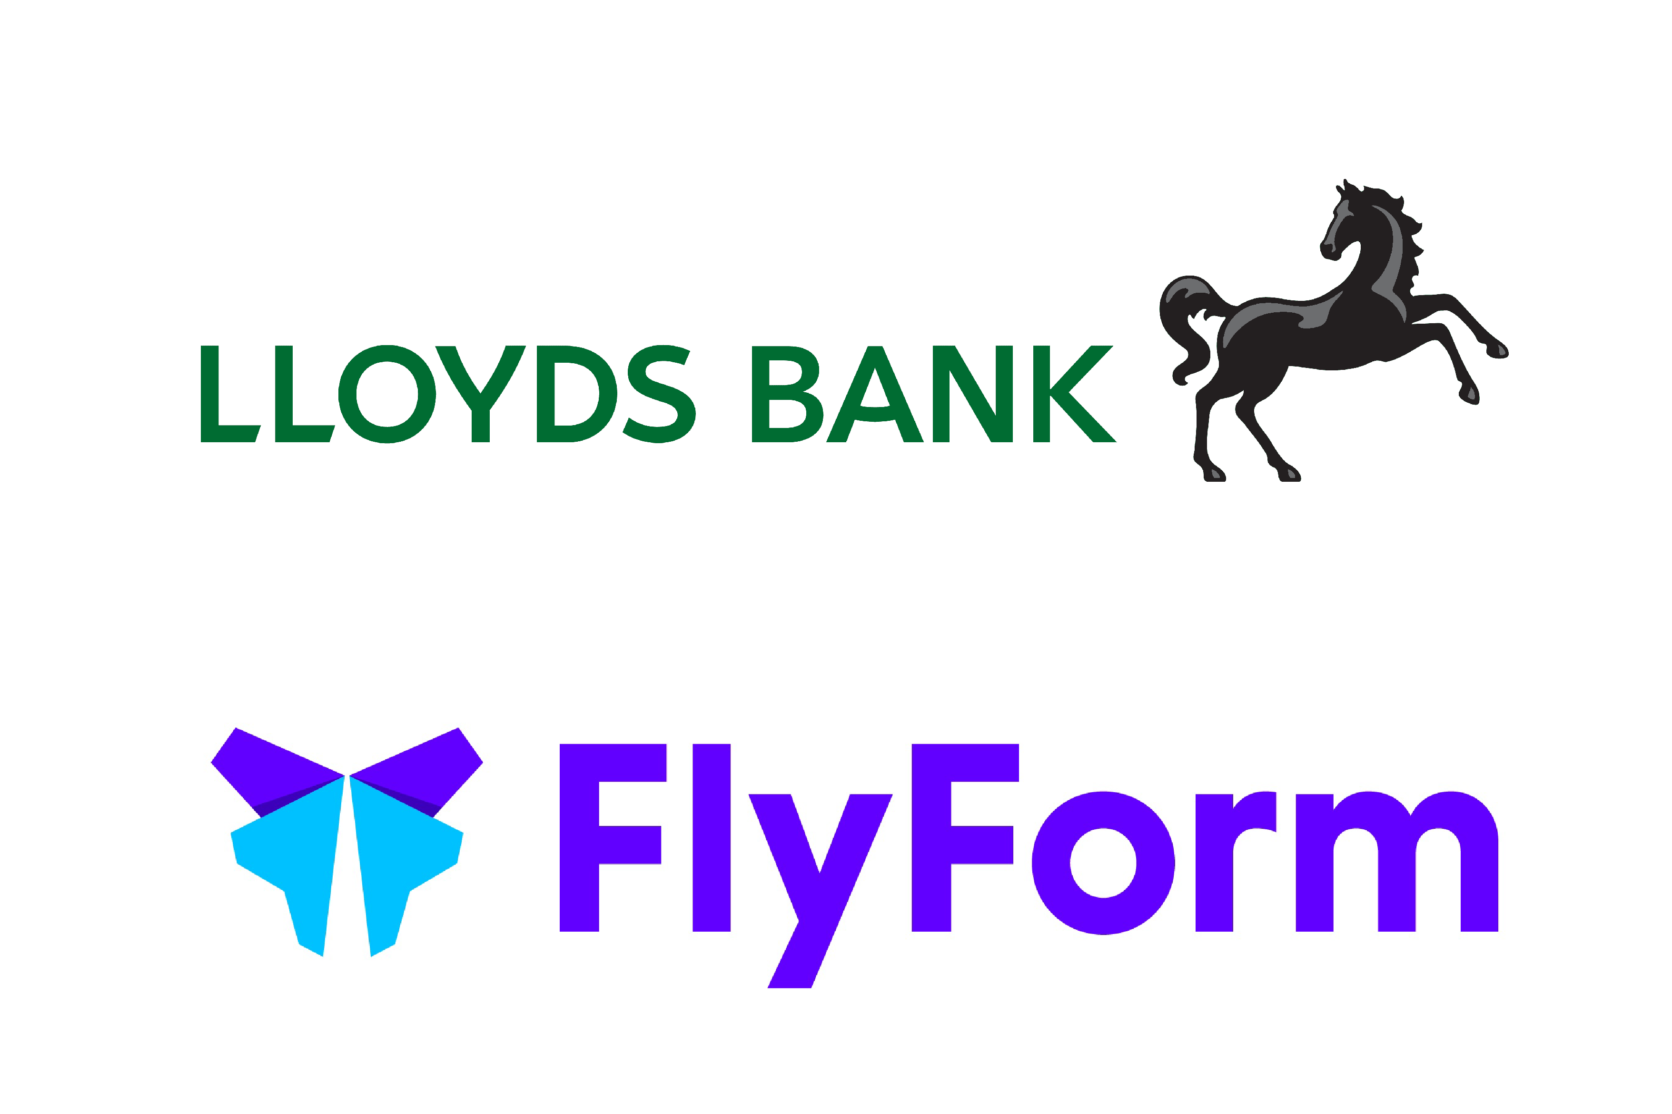 FlyForm logo and Lloyds Bank logo